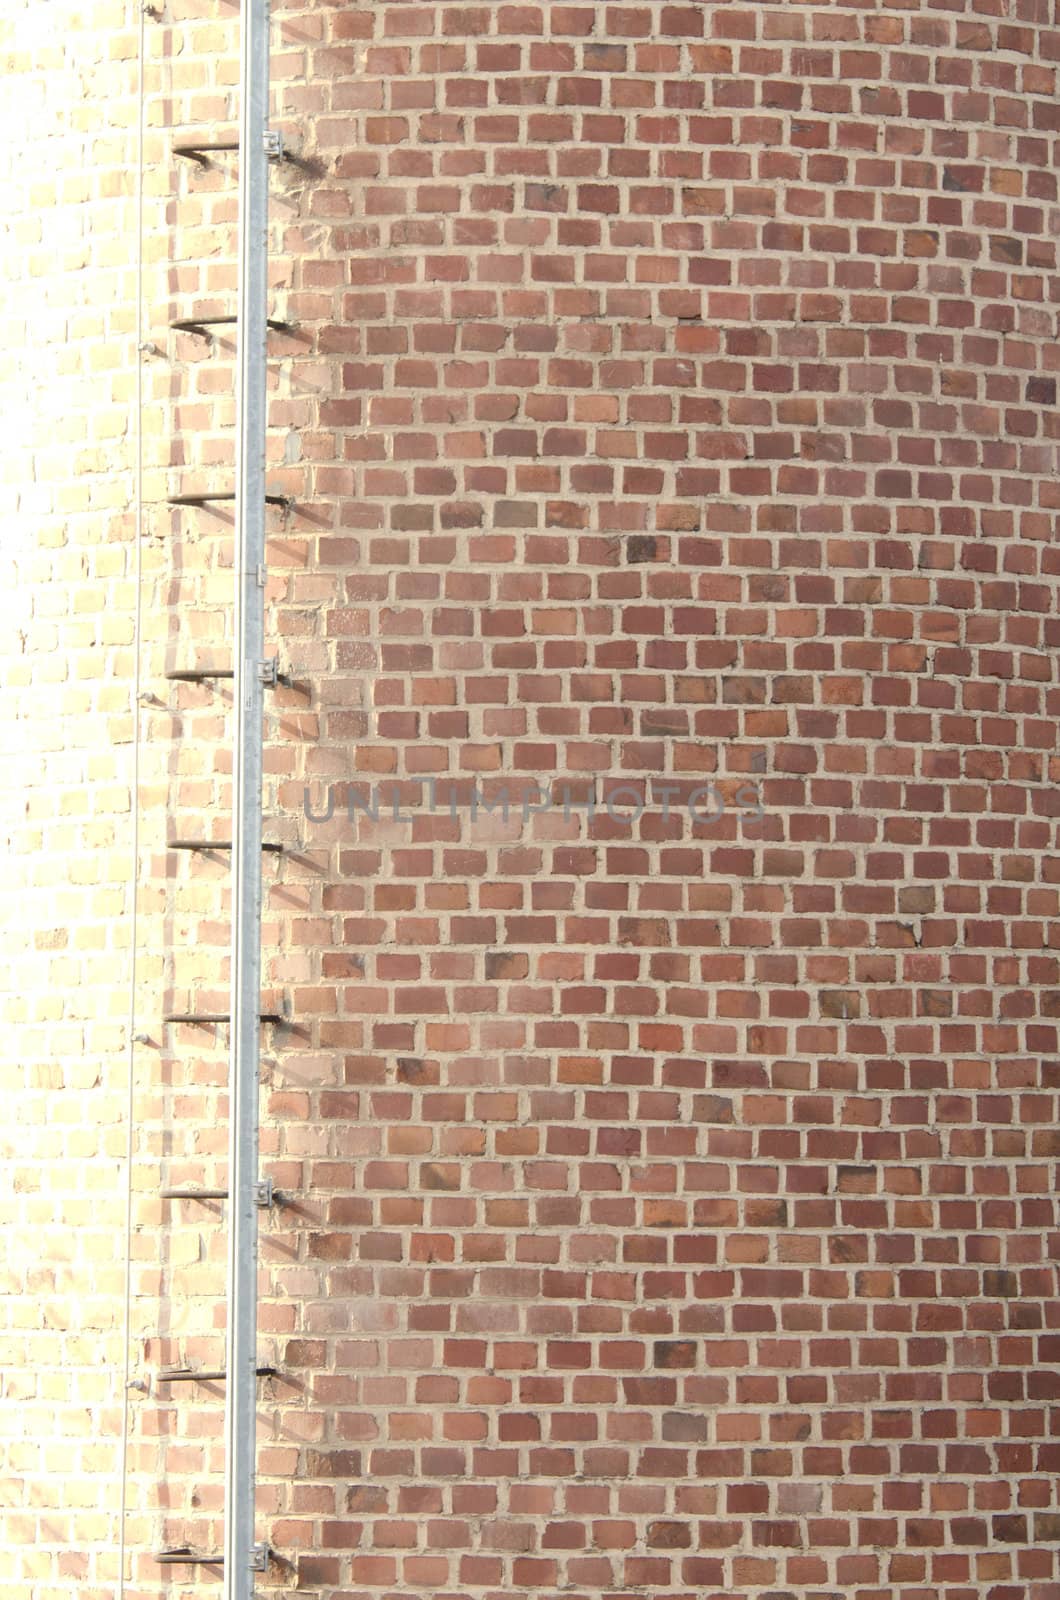 the brick chimney by njaj